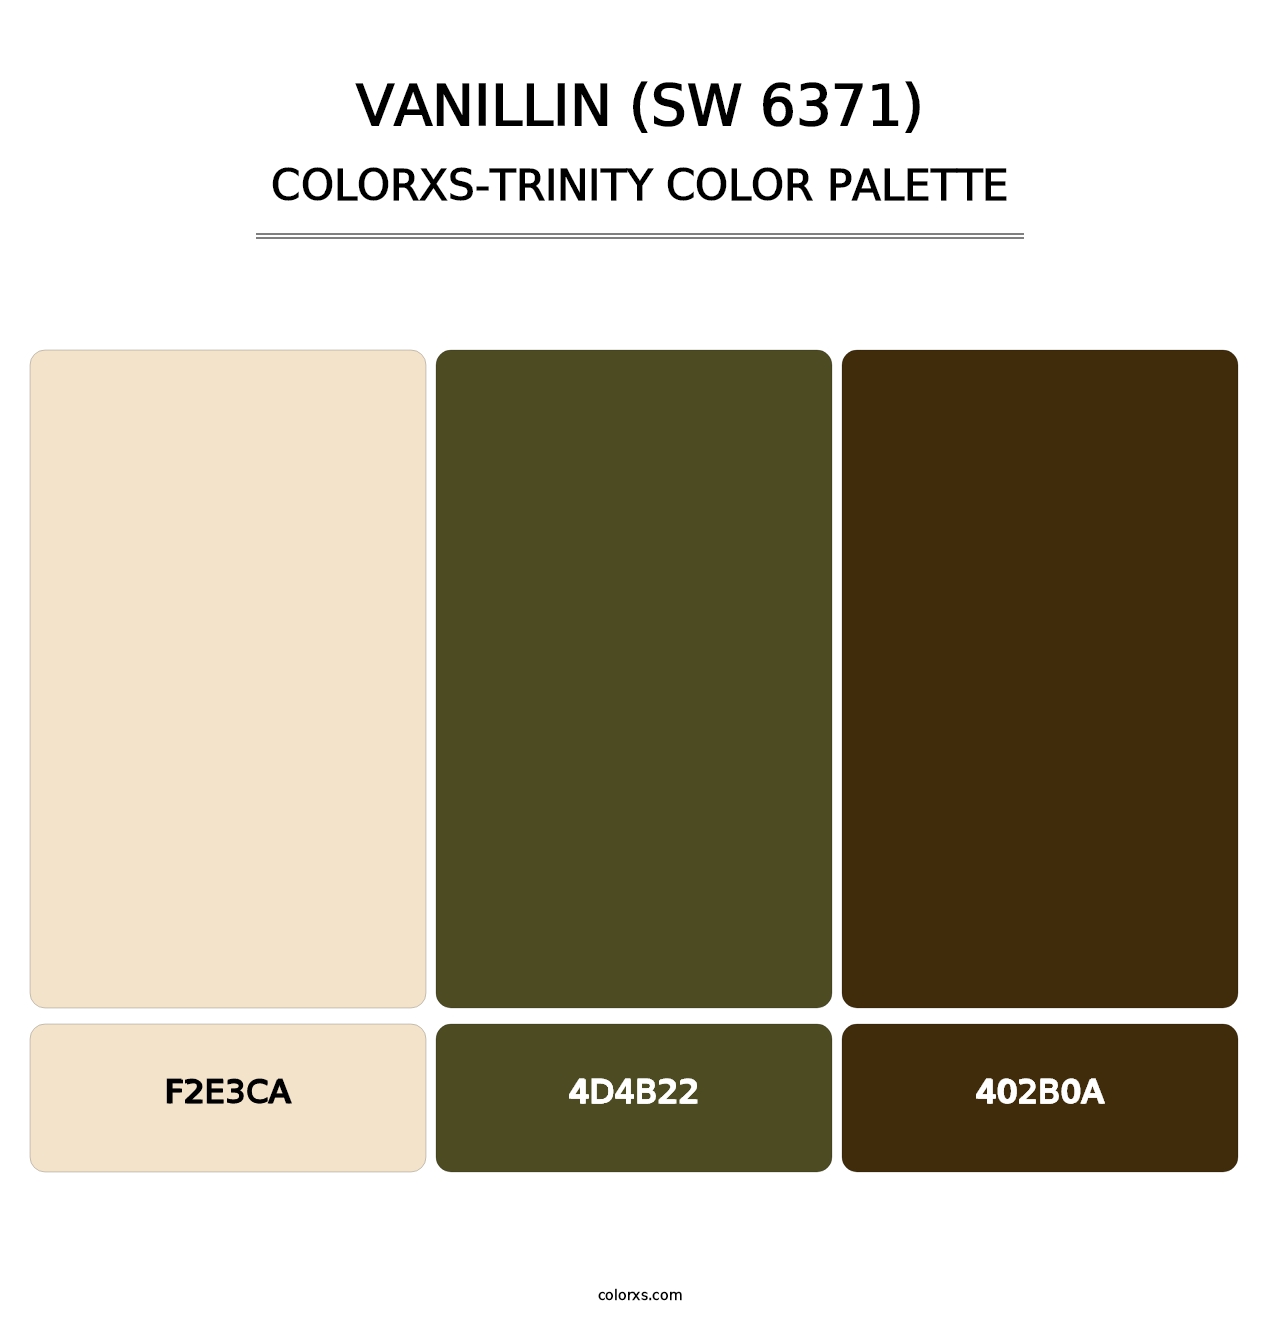 Vanillin (SW 6371) - Colorxs Trinity Palette